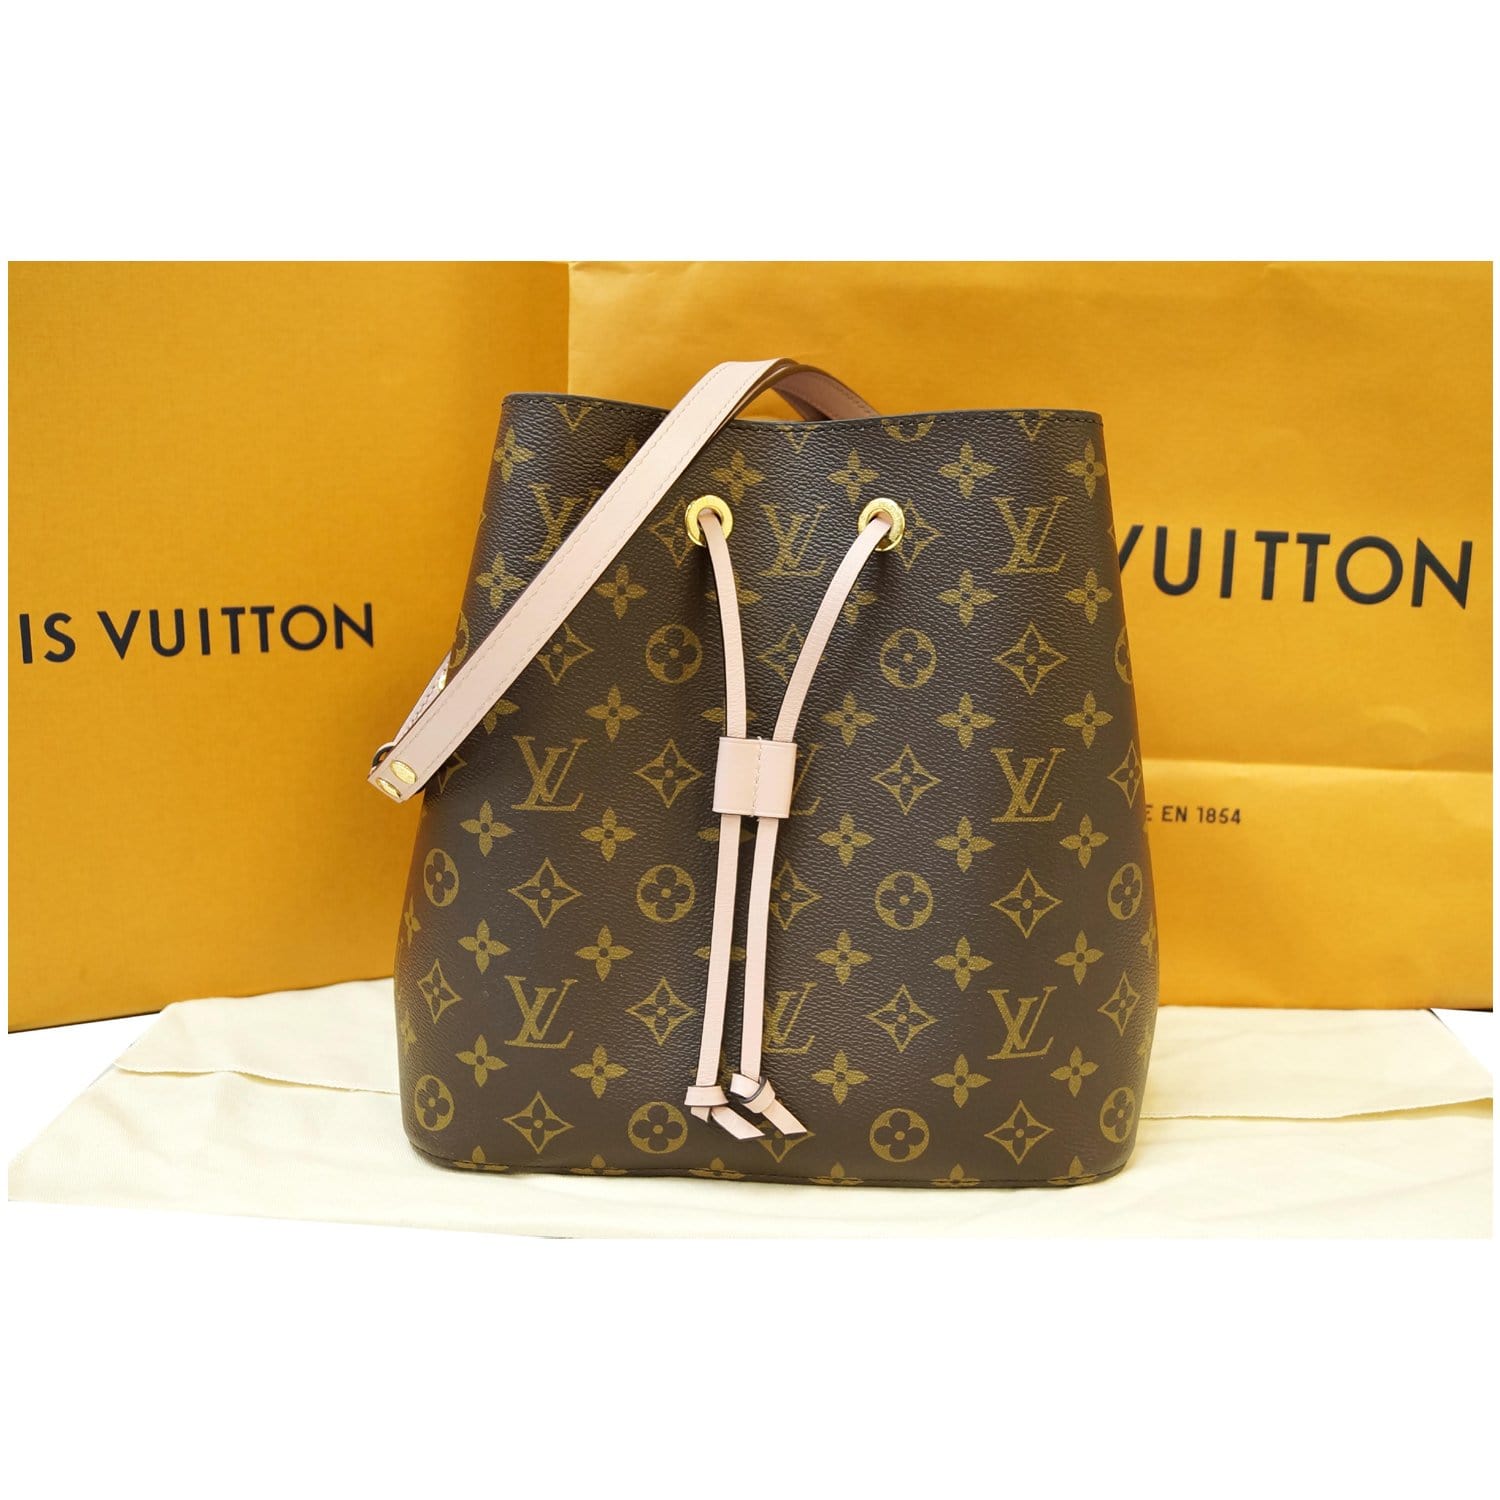 KOMEHYO, 【Unused items】LOUIS VUITTON Monogram Unplant Diane M46386 Bag, LOUIS  VUITTON, Brand Bag, Shoulder Bag, Monogram Unplant